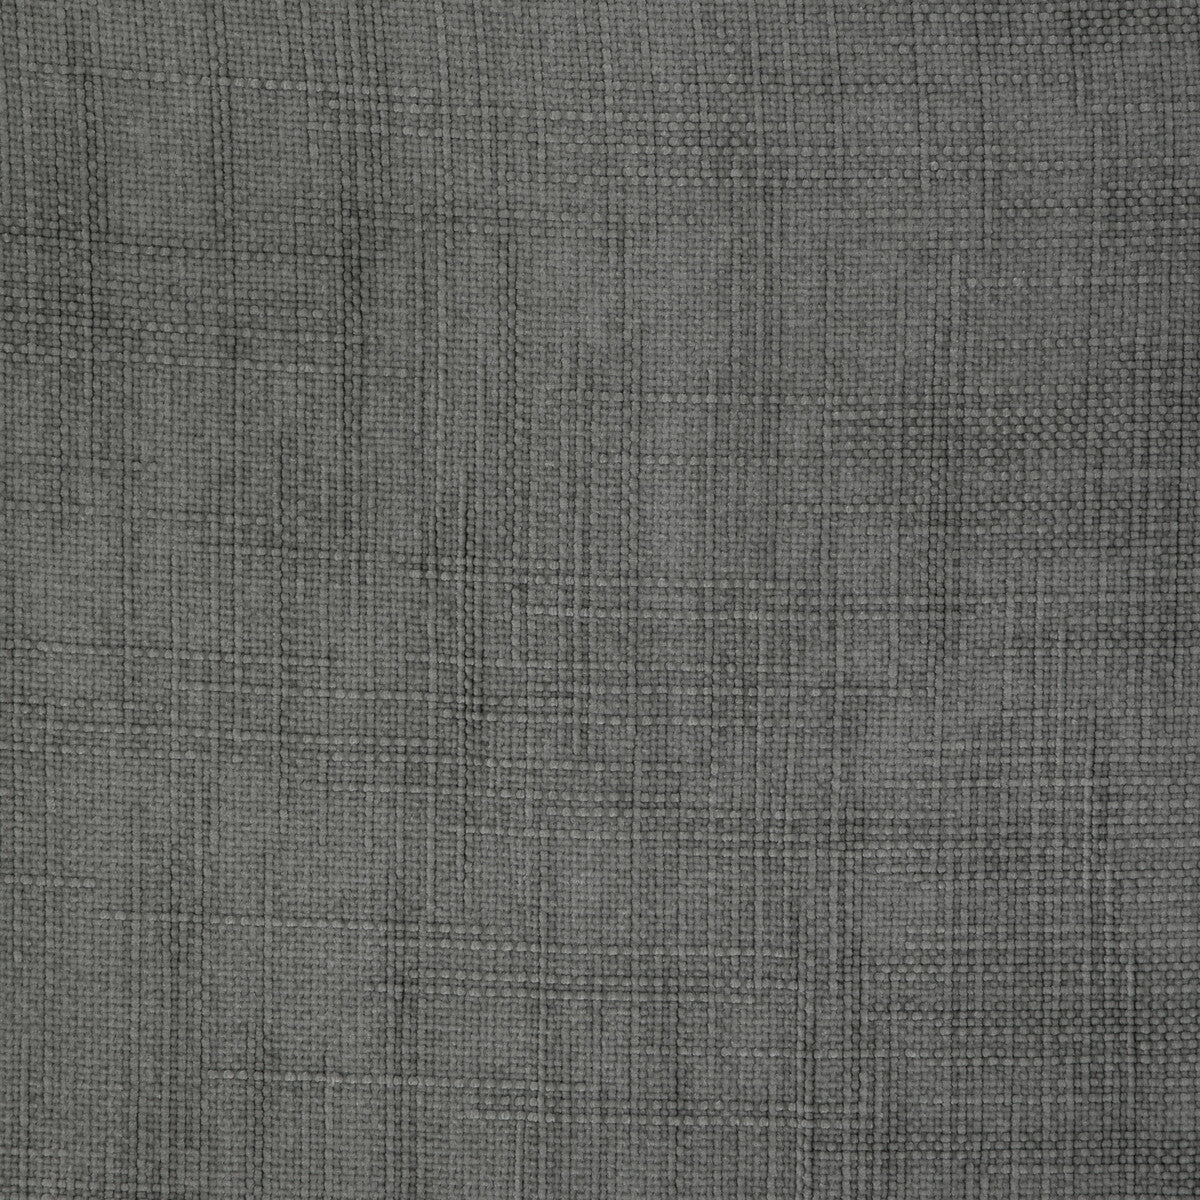 Kravet Smart fabric in 36991-11 color - pattern 36991.11.0 - by Kravet Smart in the Performance Kravetarmor collection